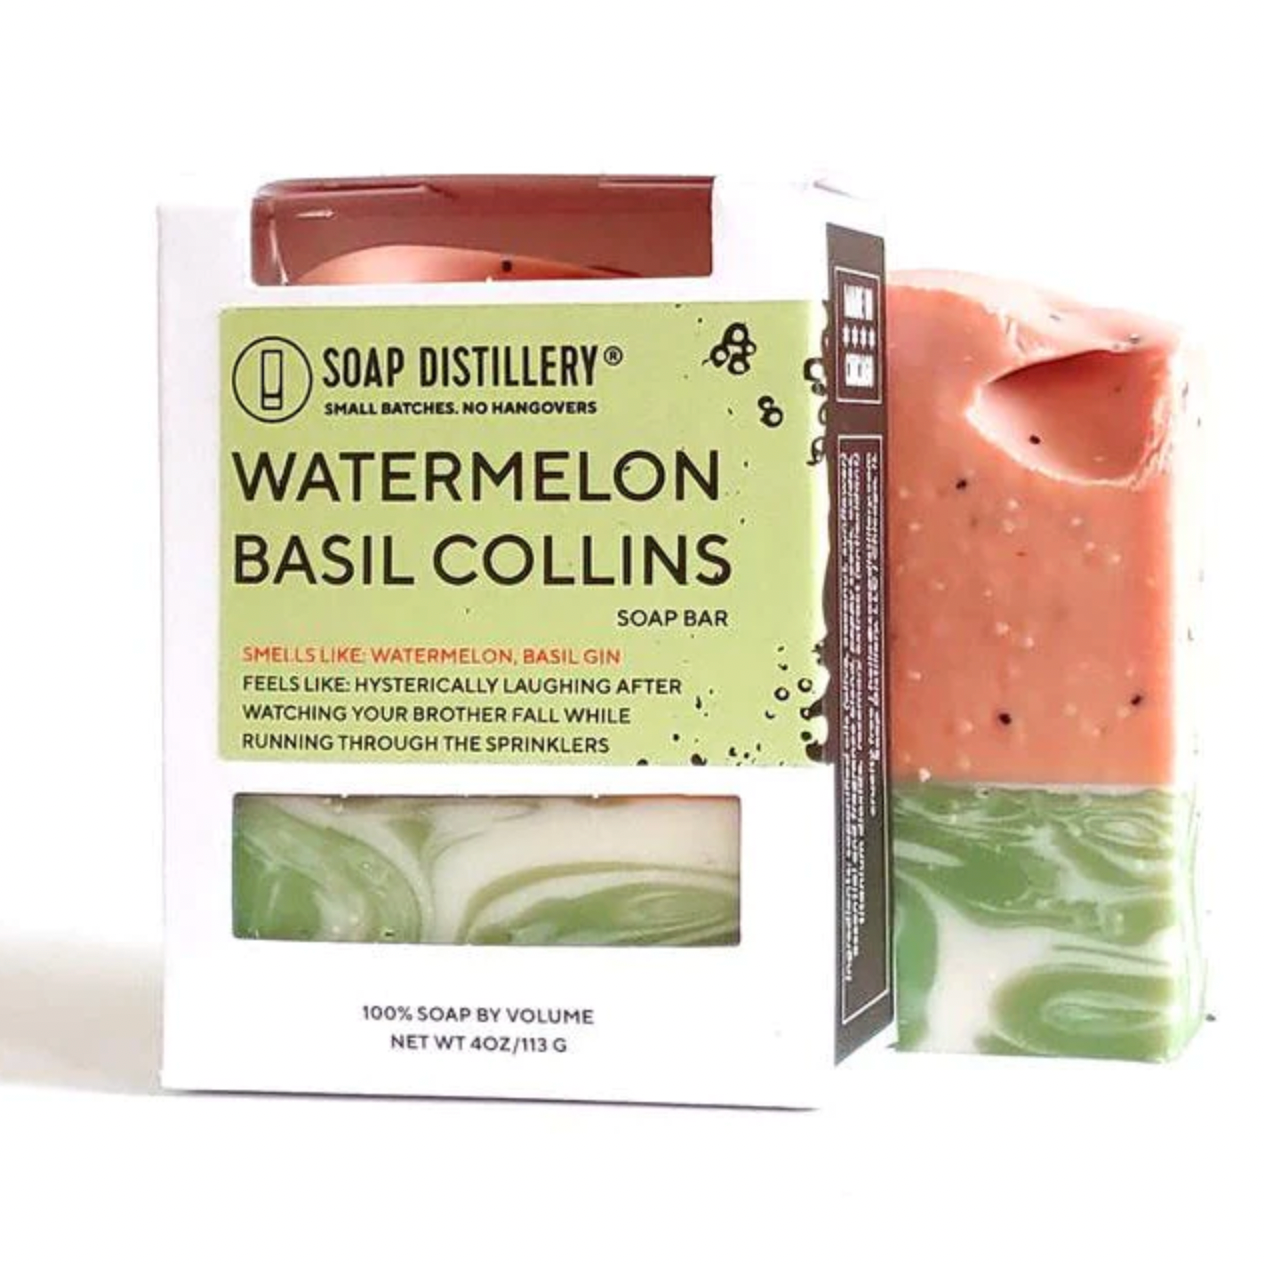 Watermelon Basil Collins Soap Bar - Drifts East